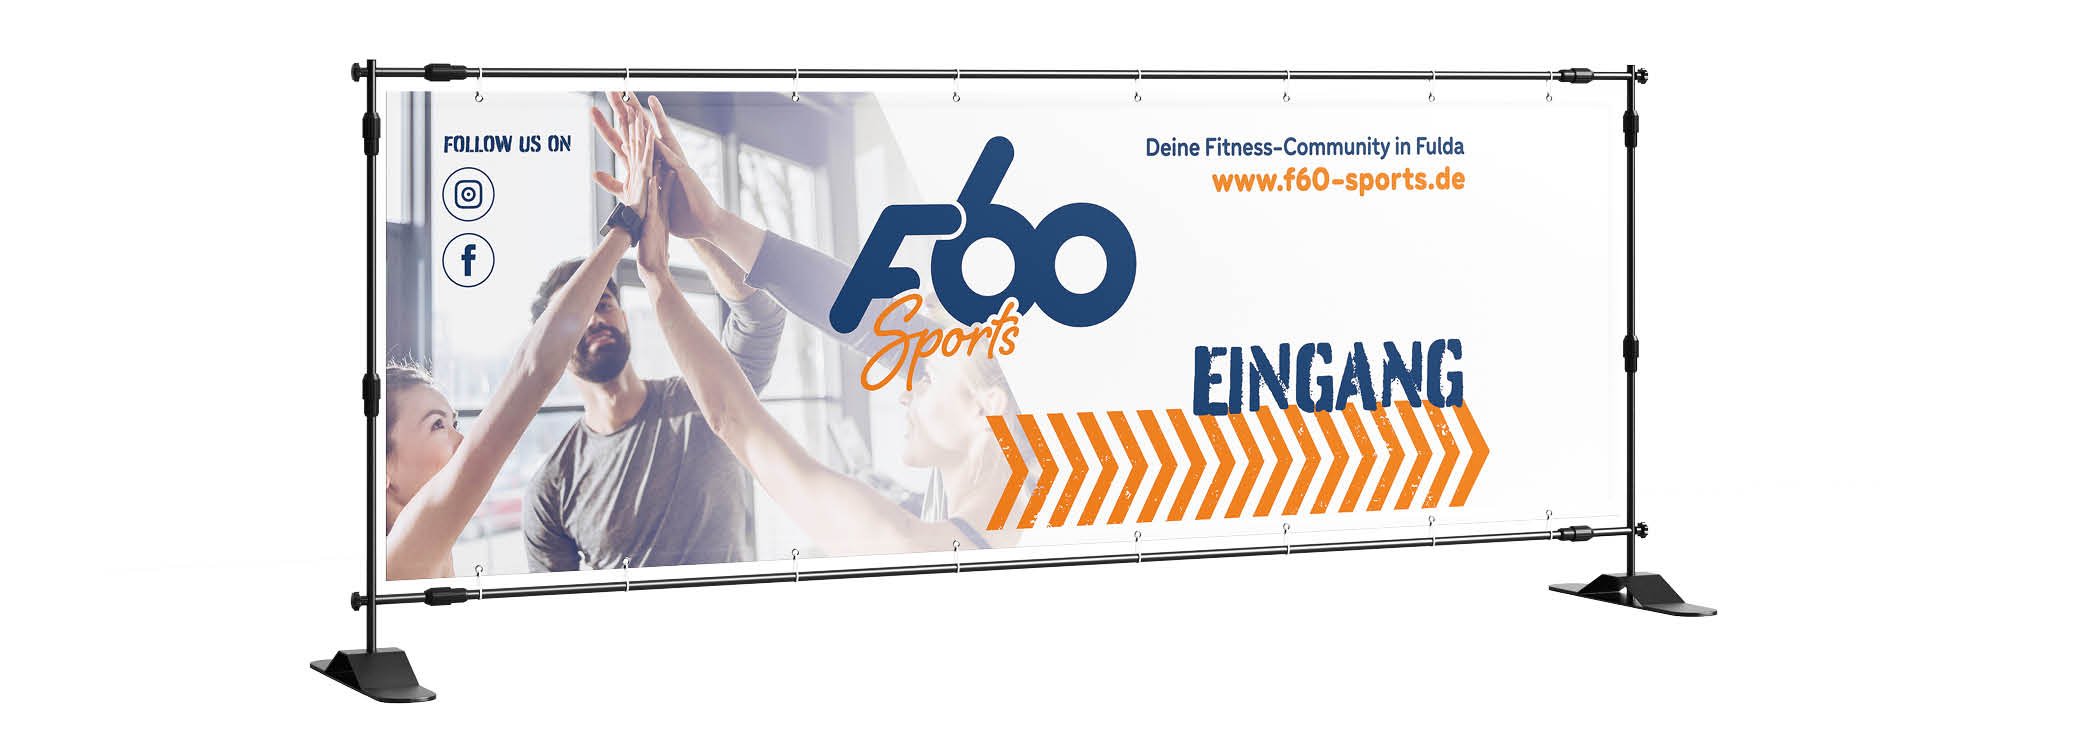 F60-sports-fitnessstudio-werbebanner-mockup-fulda.jpg